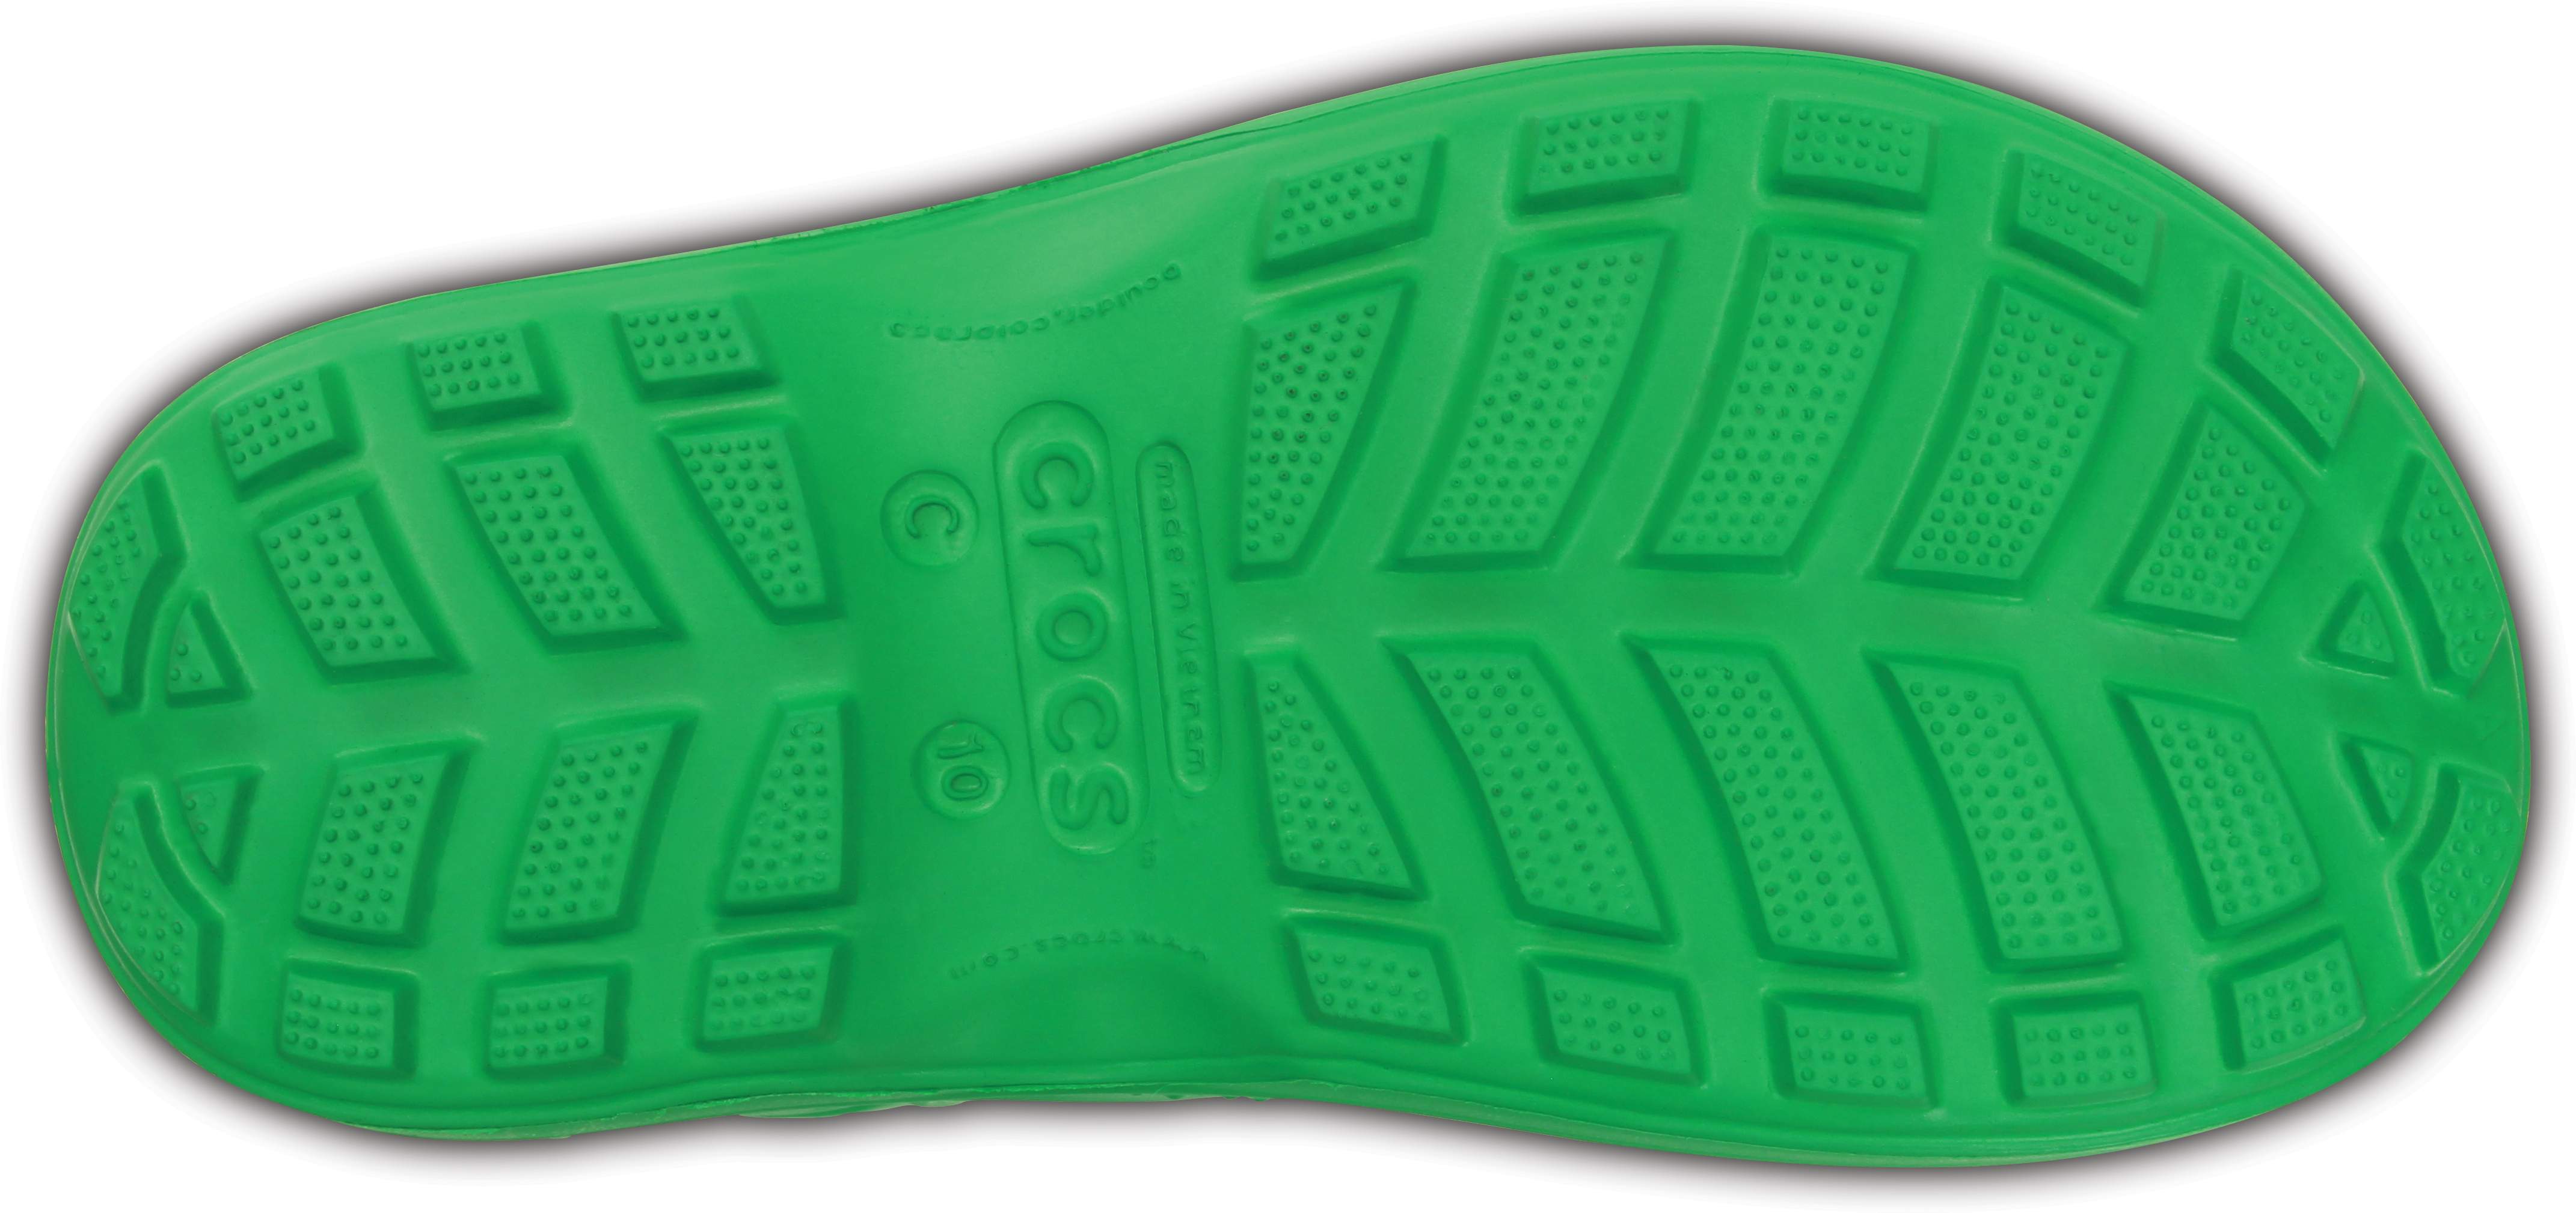 crocs width sizing